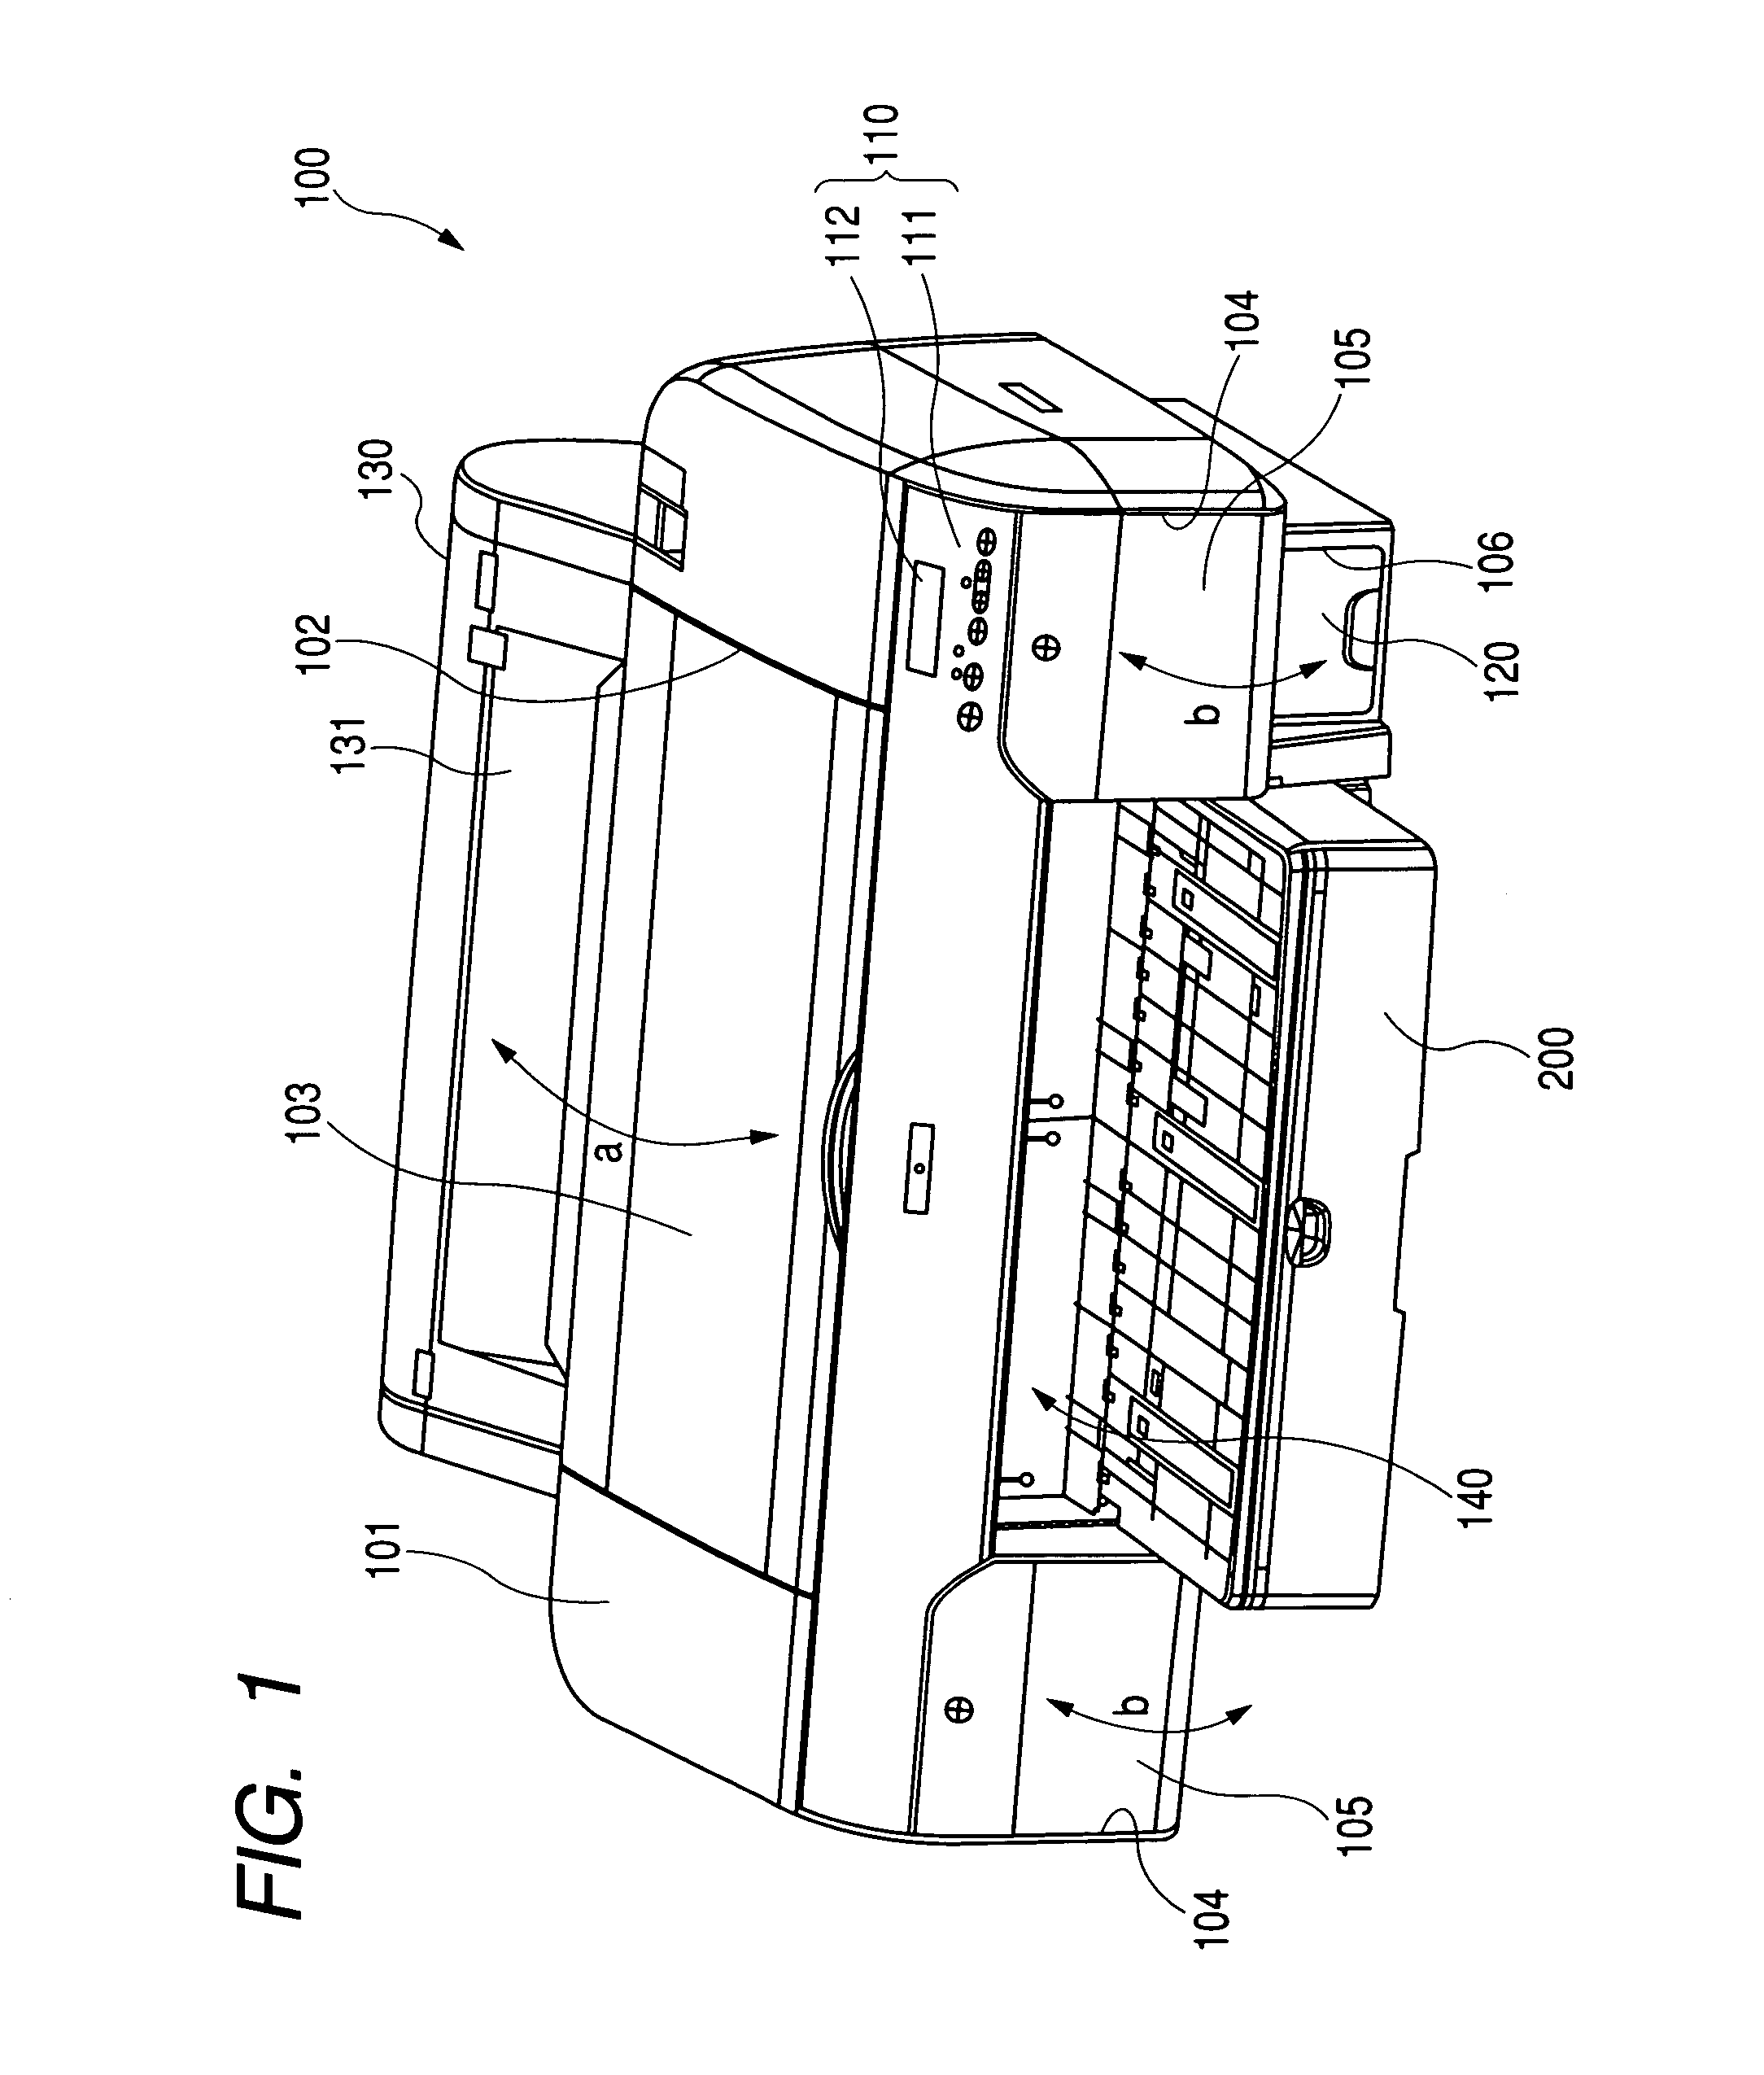 Tray and recording apparatus